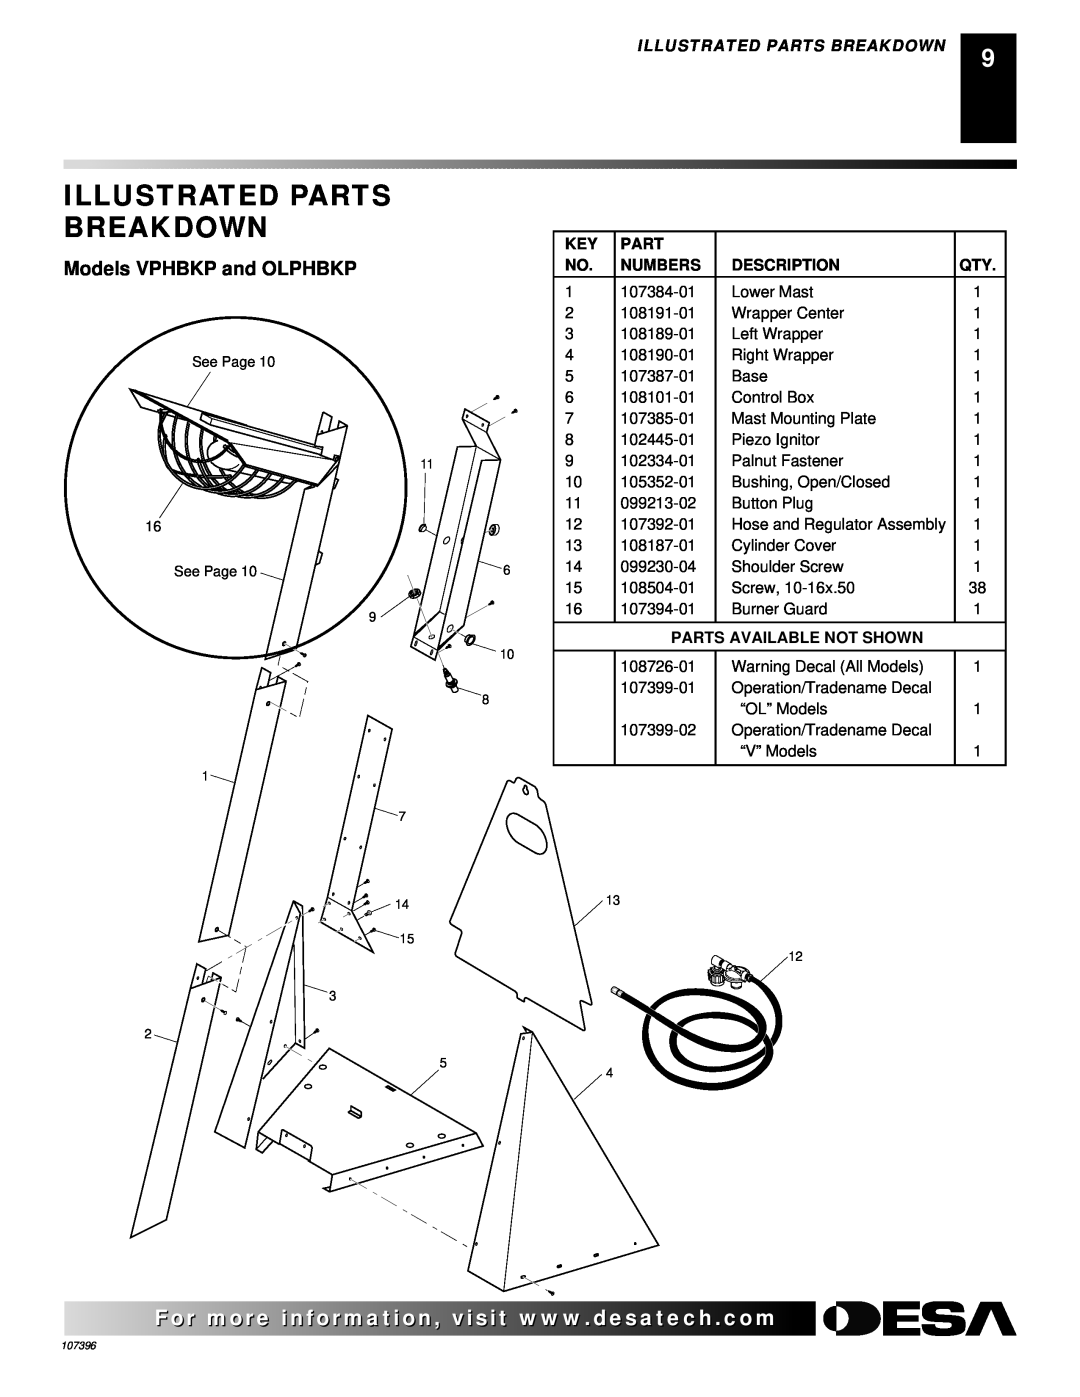 Desa 28BN installation manual Illustrated Parts Breakdown, Models VPHBKP and OLPHBKP 